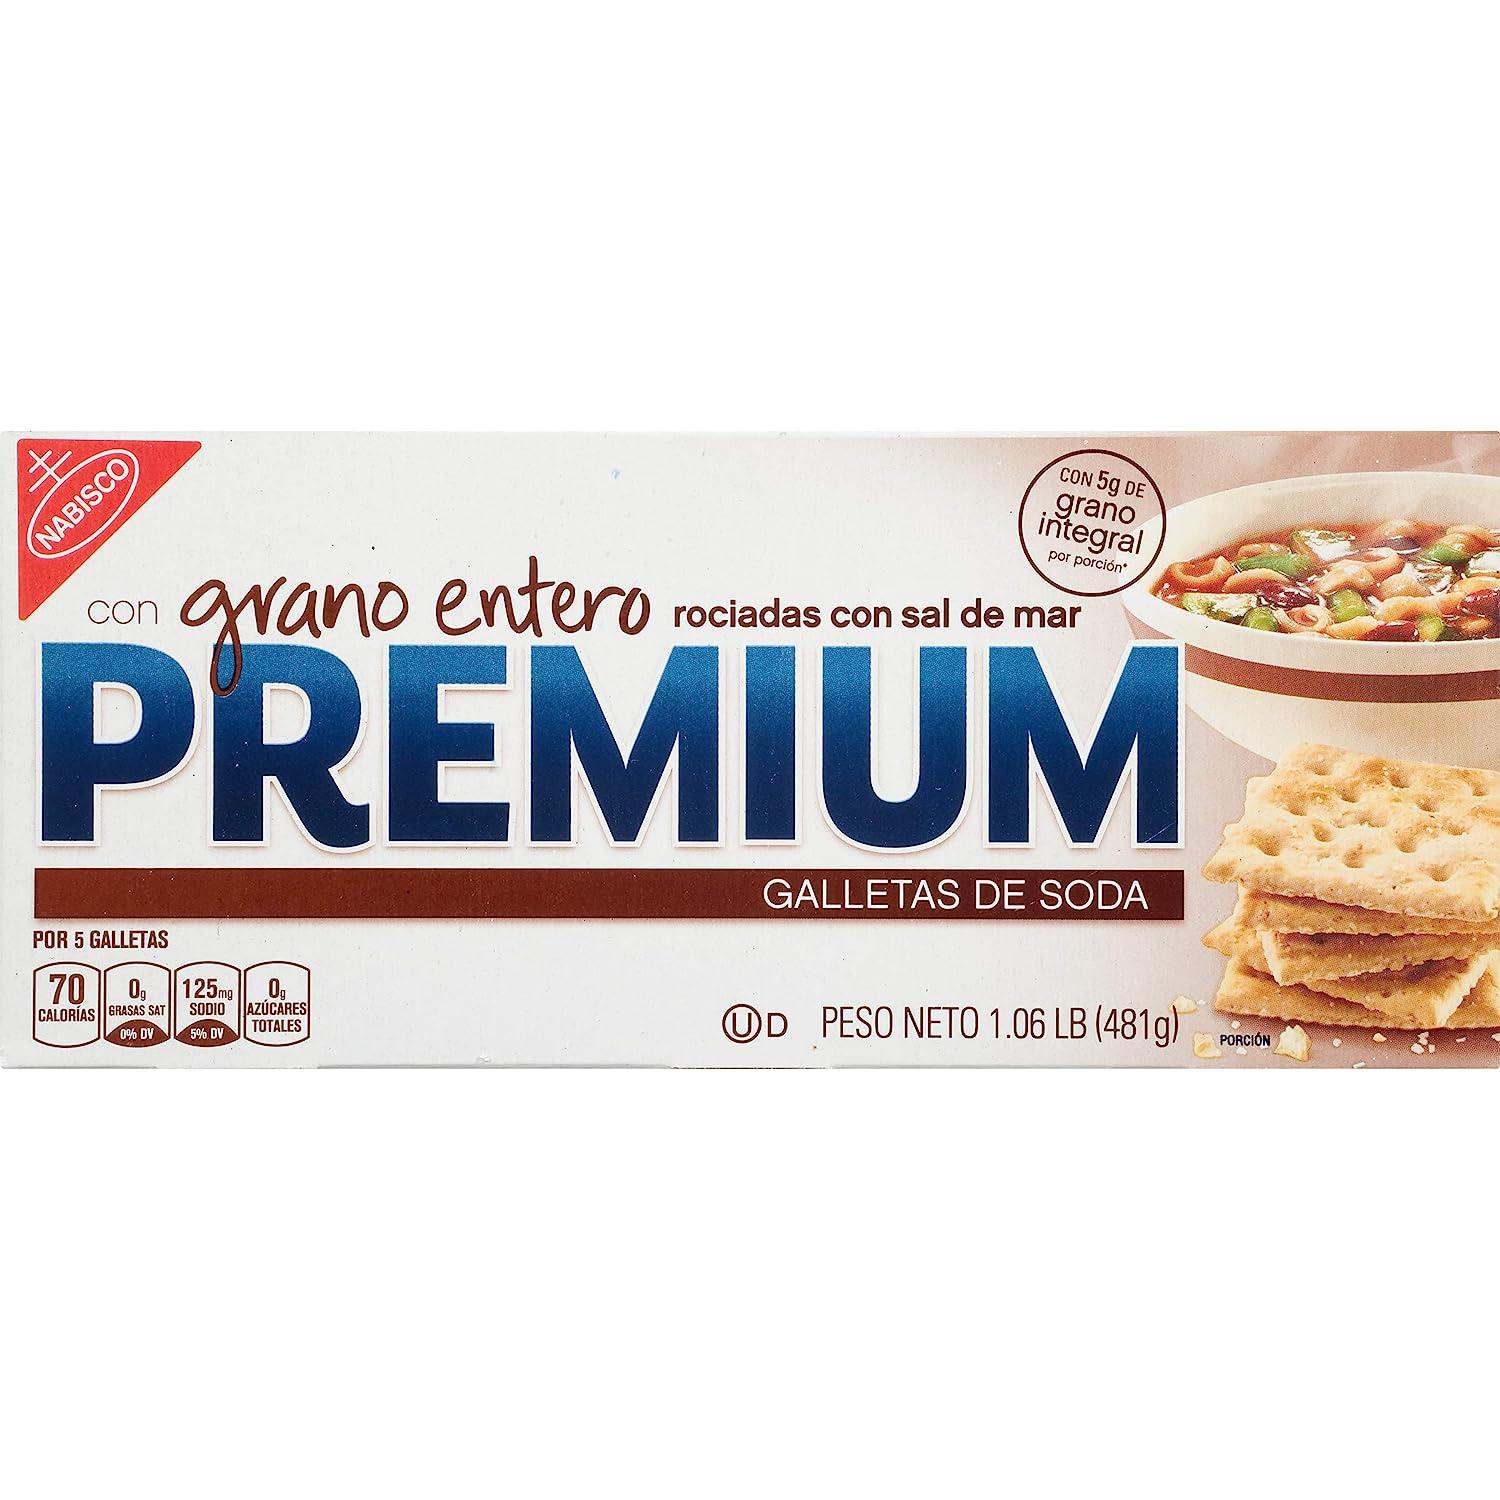 Premium Whole Grain Saltine Crackers, 1.06 lb